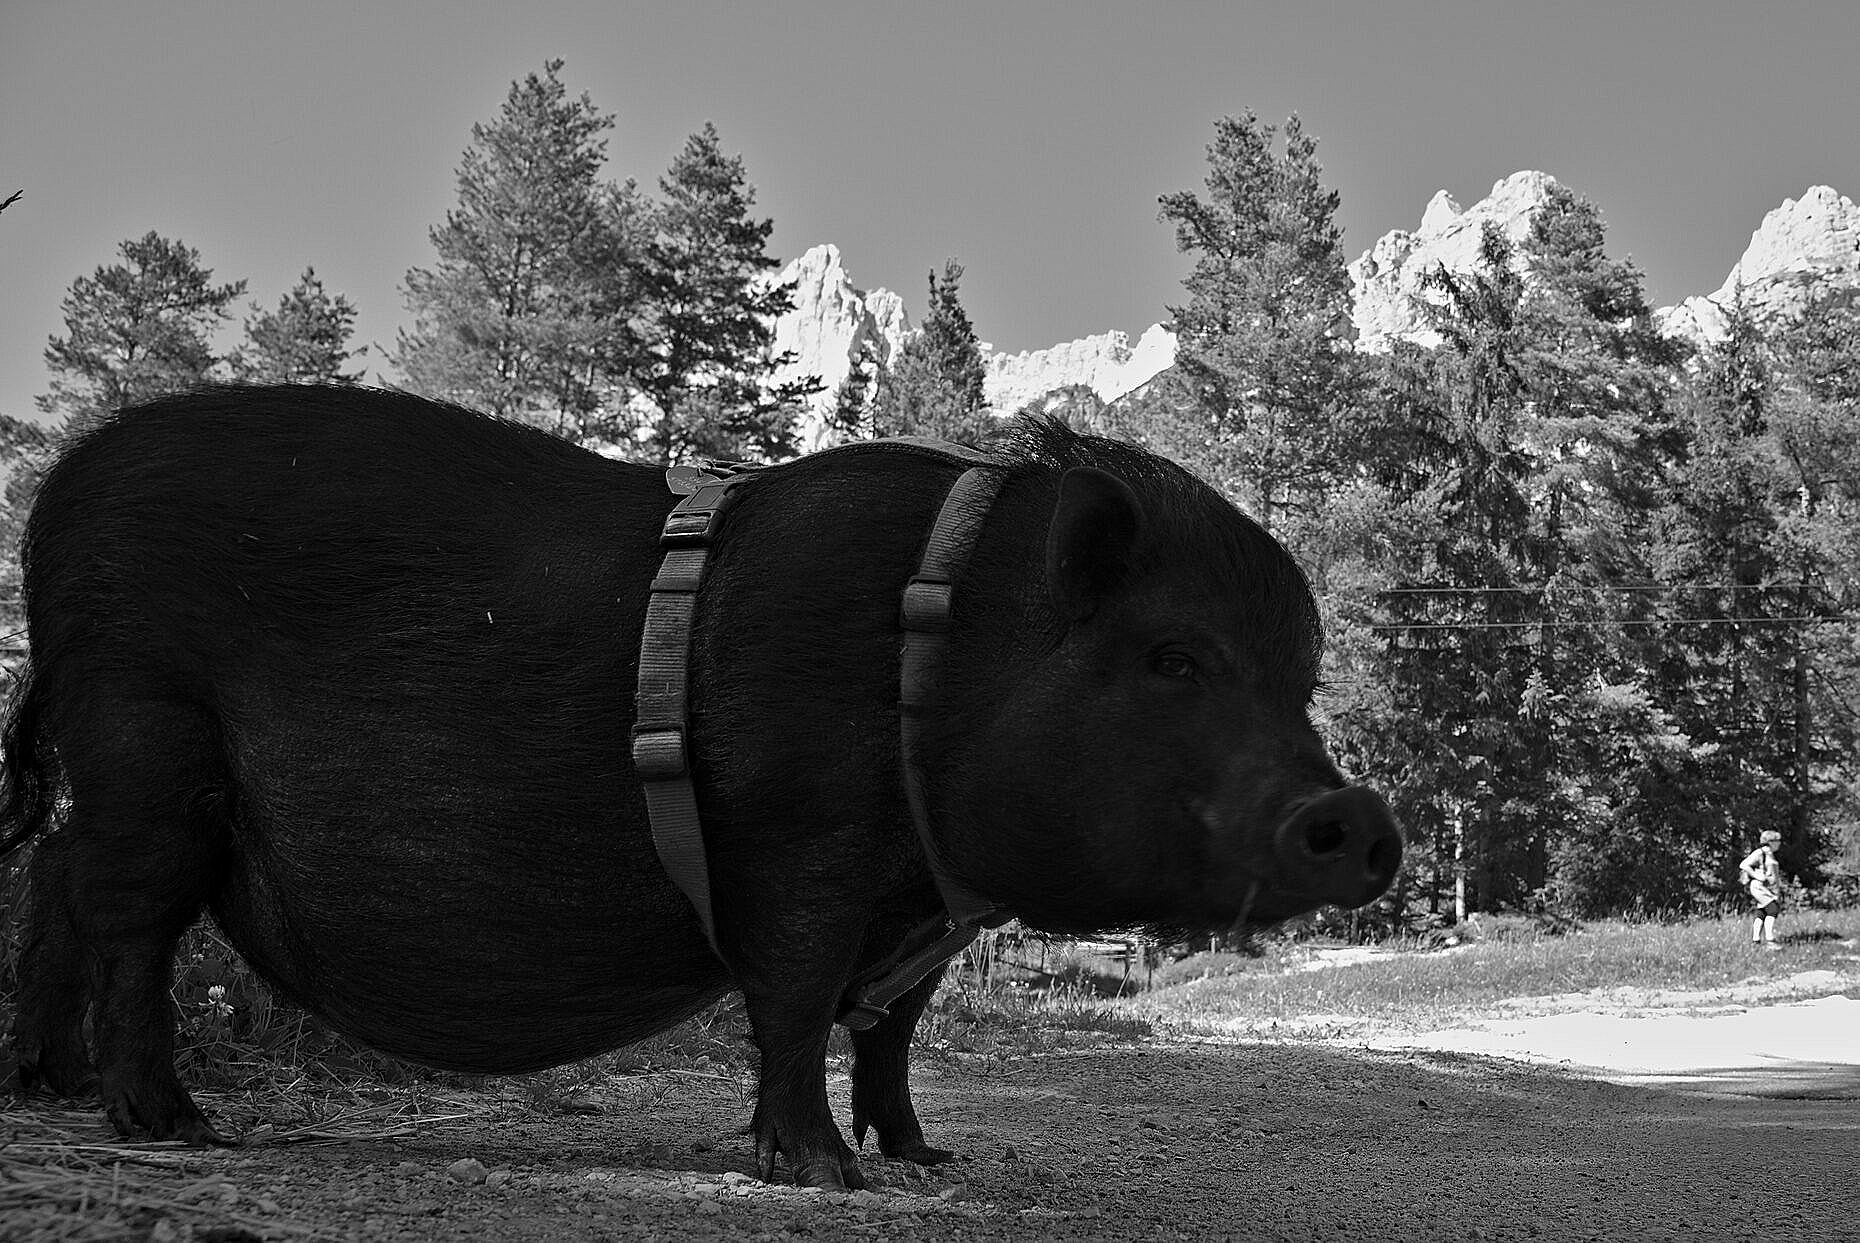 A pet pig in San Vito di Cadore in the Dolomites, Italy.